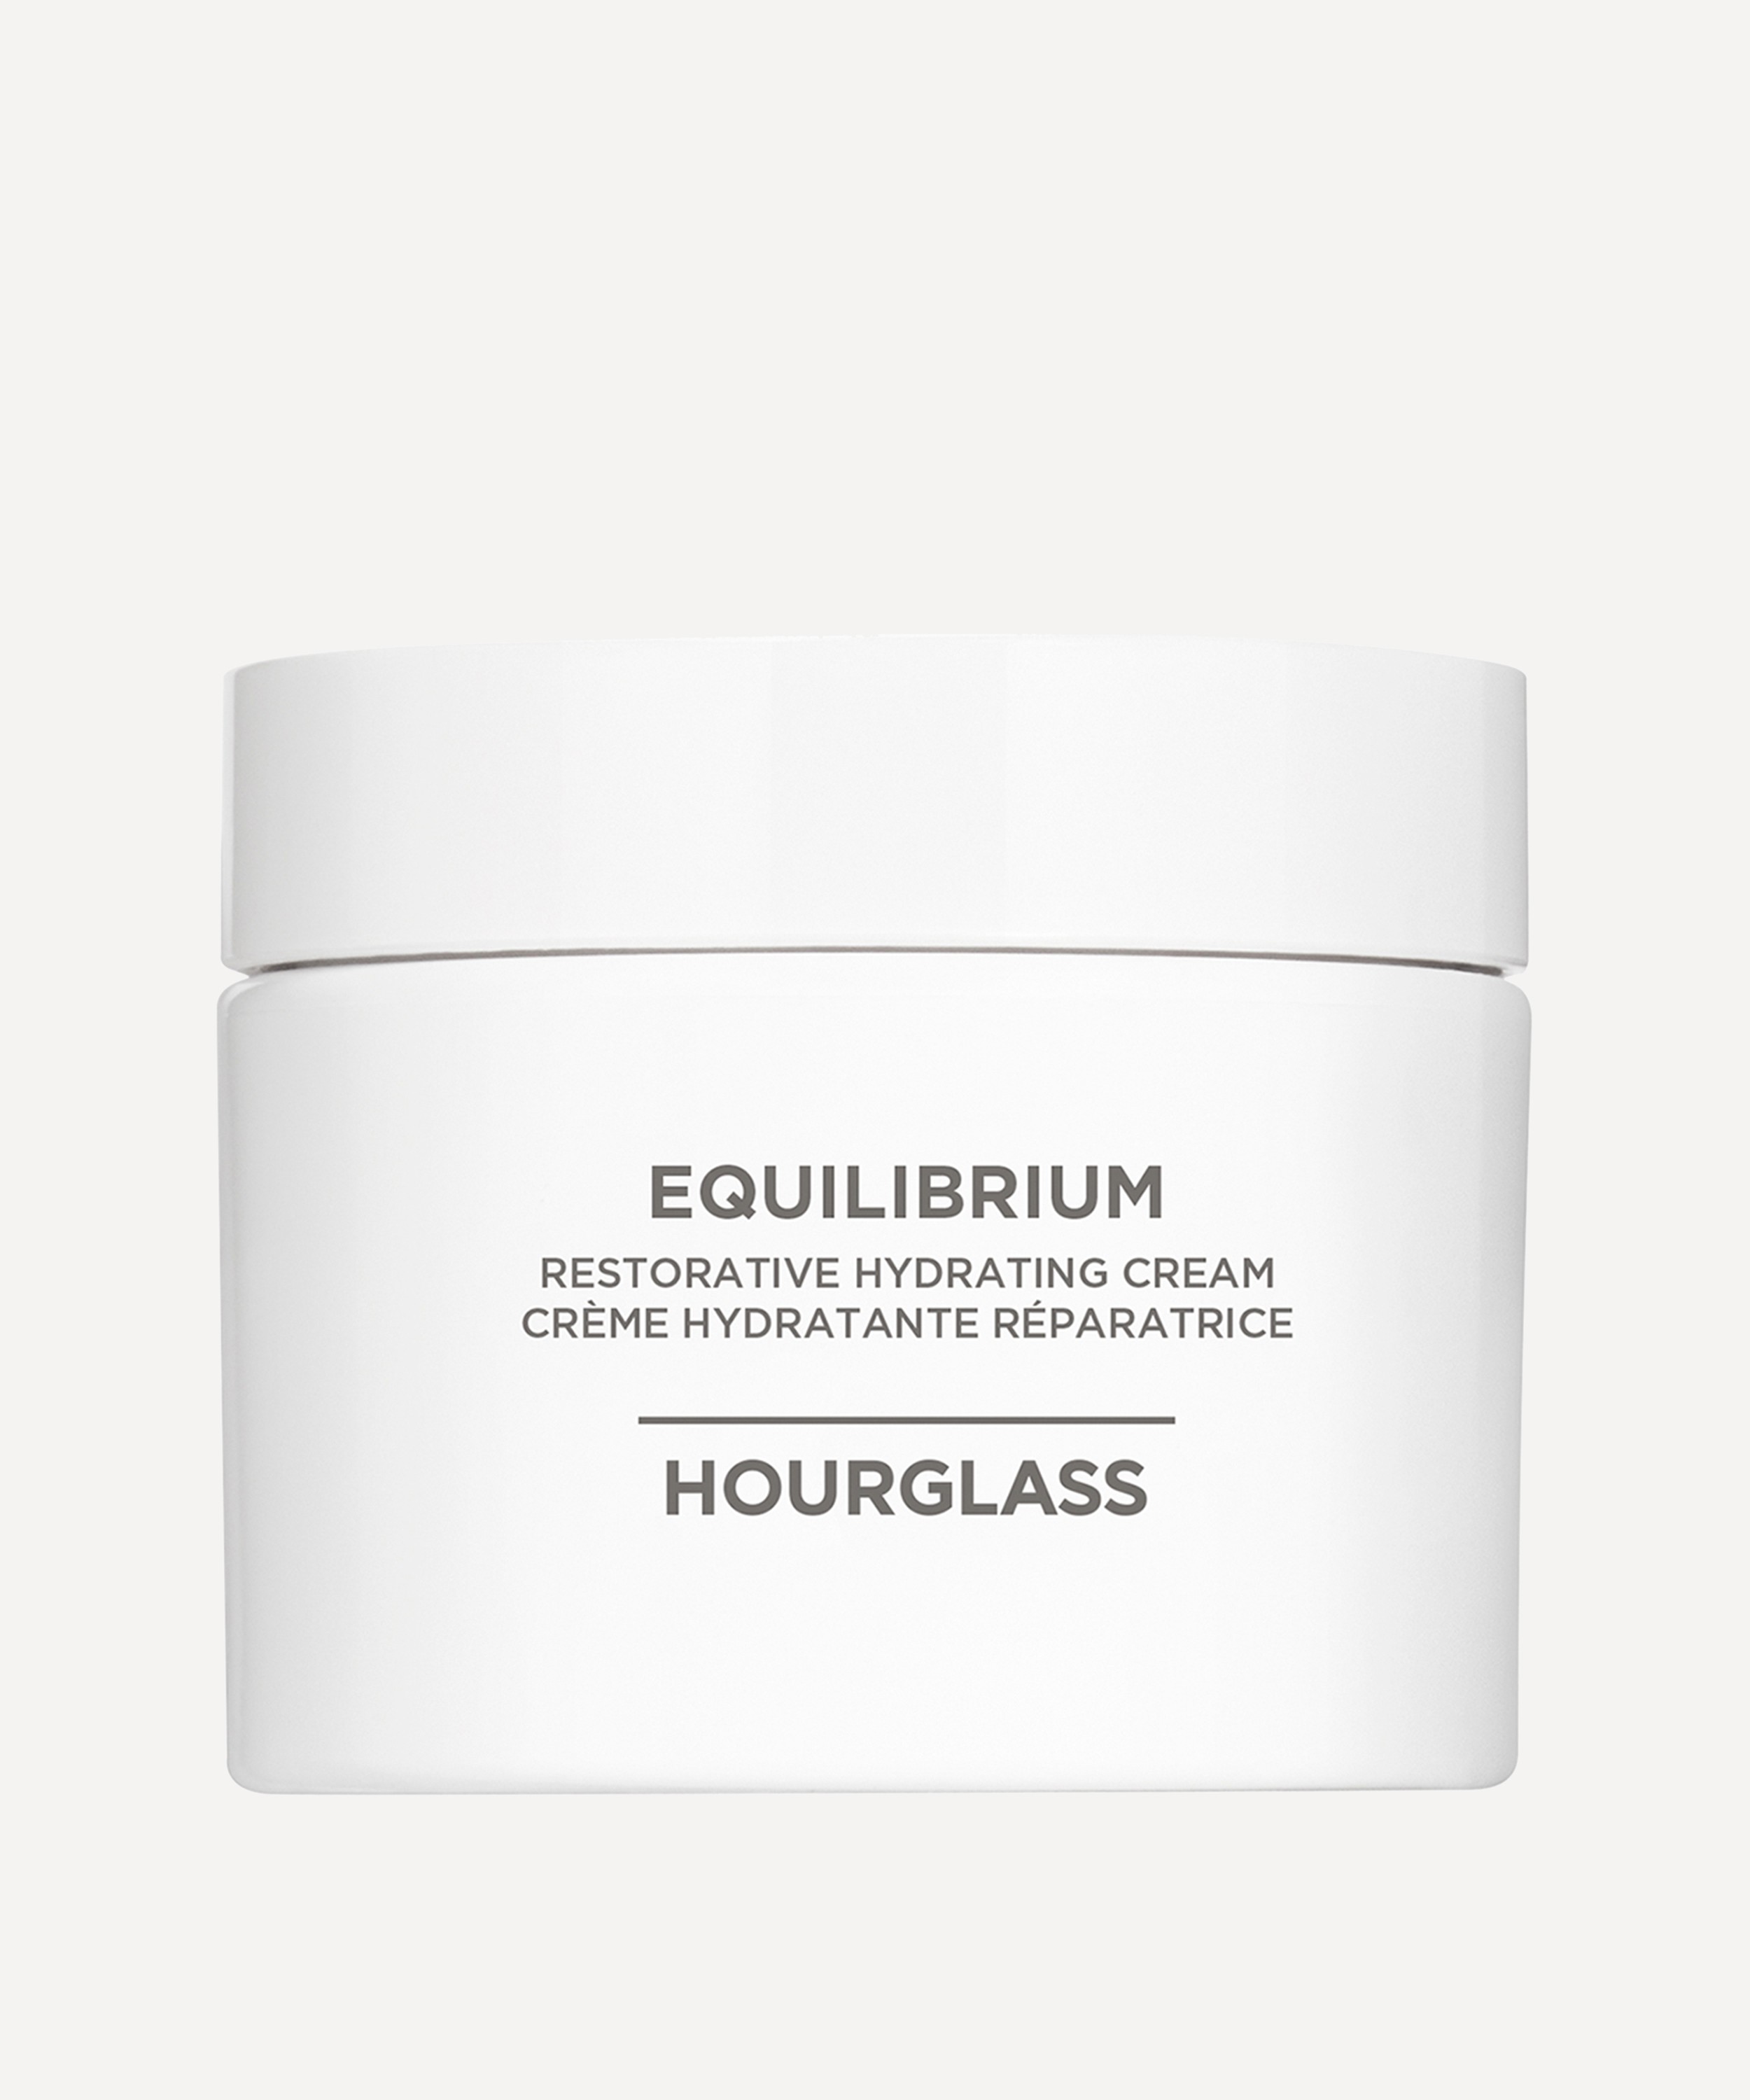 Hourglass - Equilibrium Restorative Hydrating Cream 53.8g